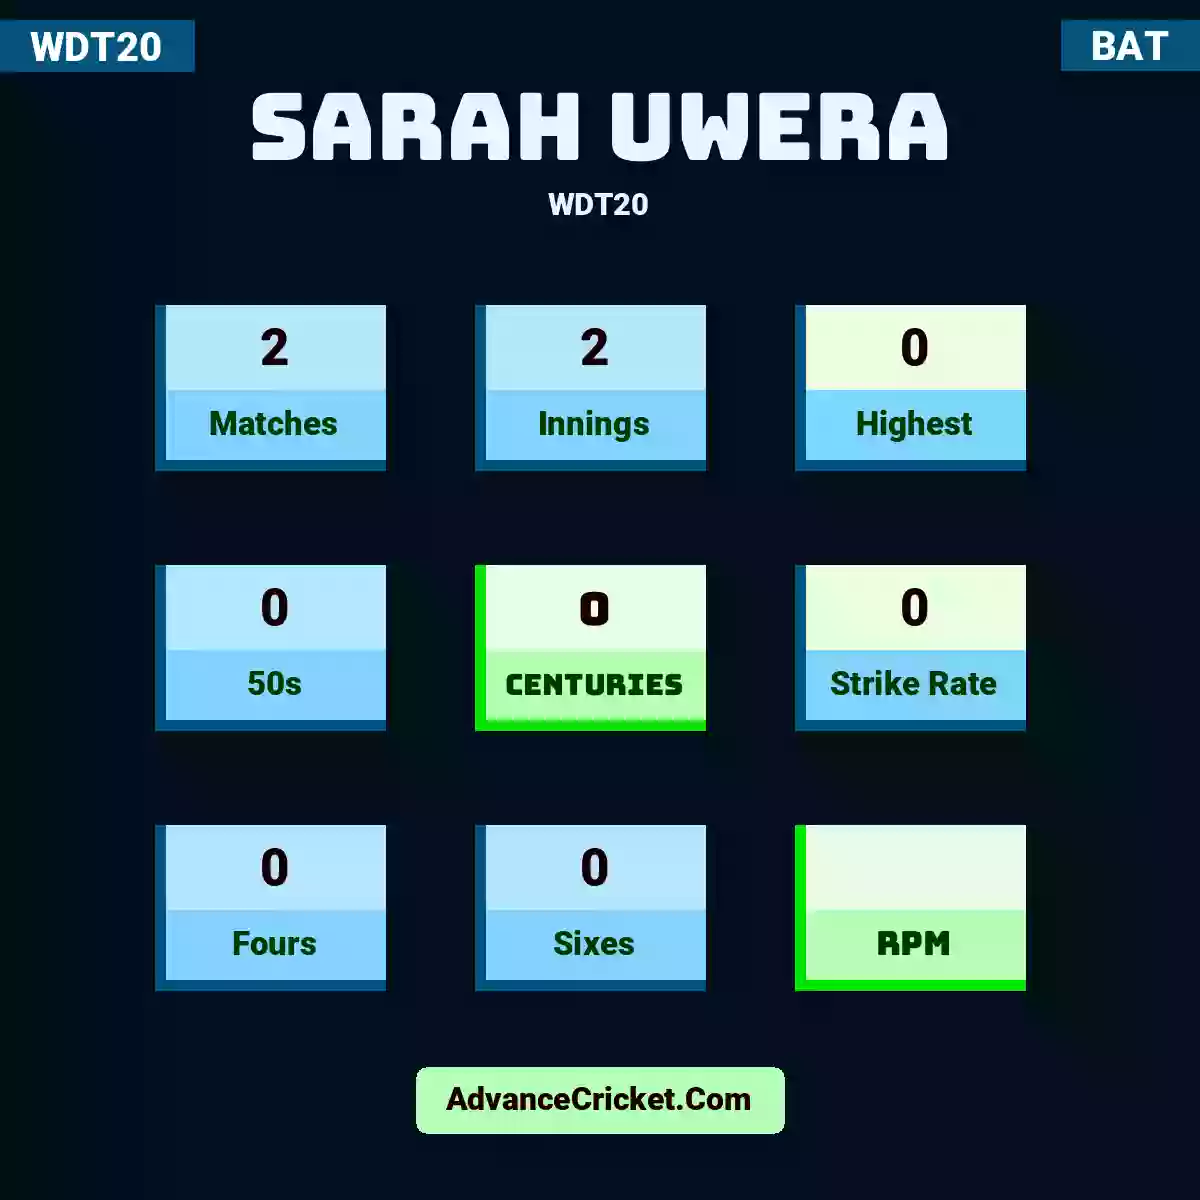 Sarah Uwera WDT20 , Sarah Uwera played 2 matches, scored 0 runs as highest, 0 half-centuries, and 0 centuries, with a strike rate of 0. S.Uwera hit 0 fours and 0 sixes.